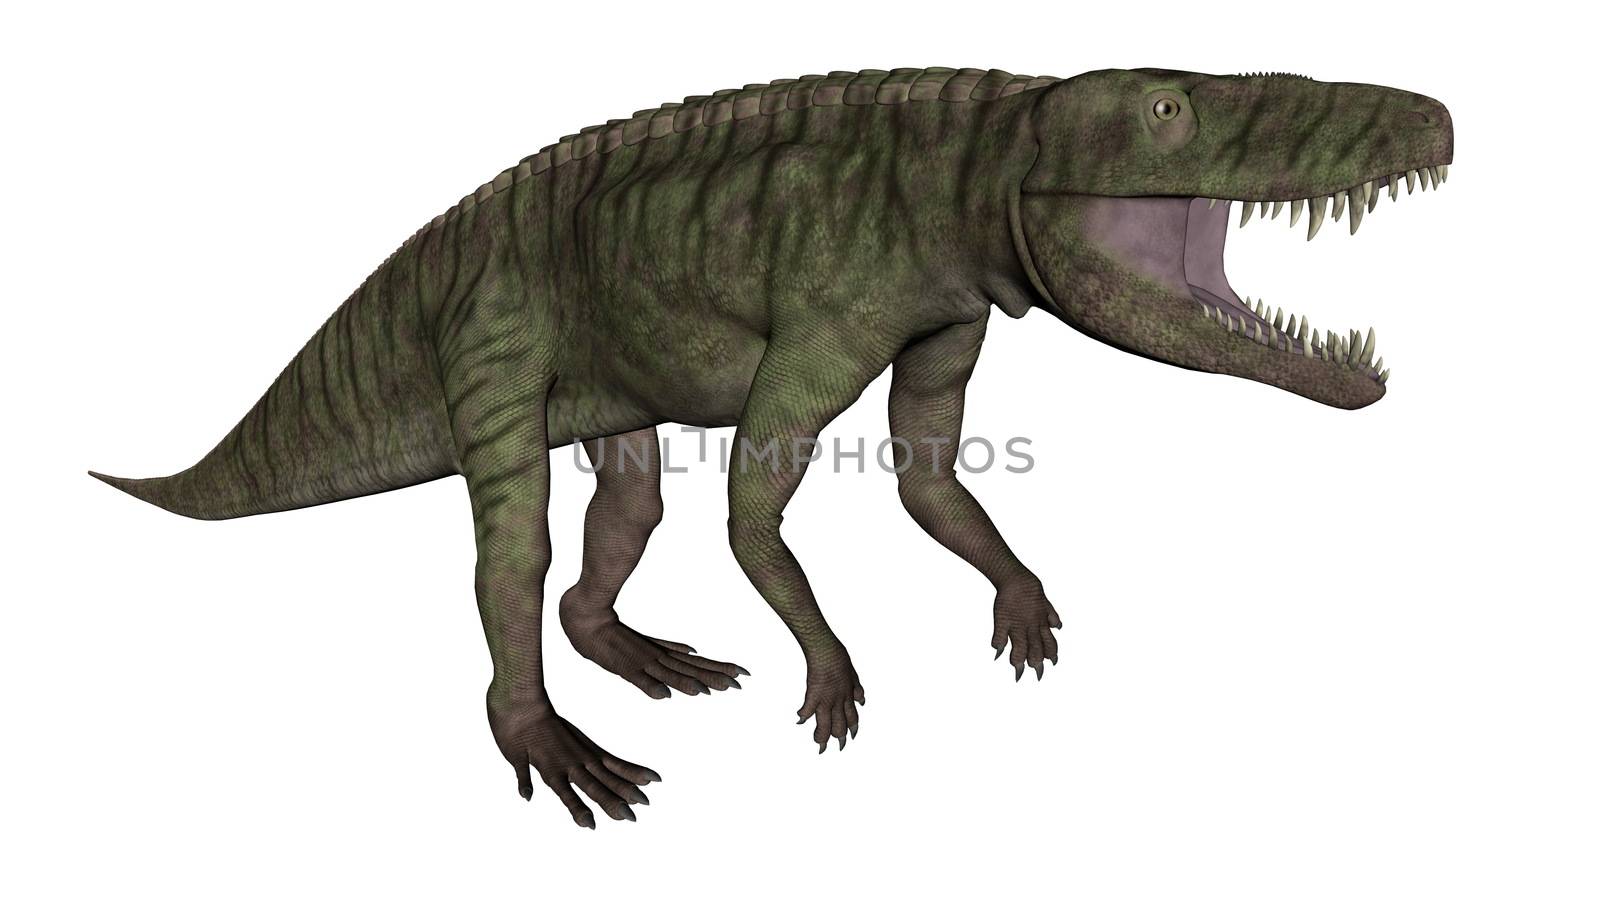 Batrachotomus dinosaur roaring isolated in white background - 3D render